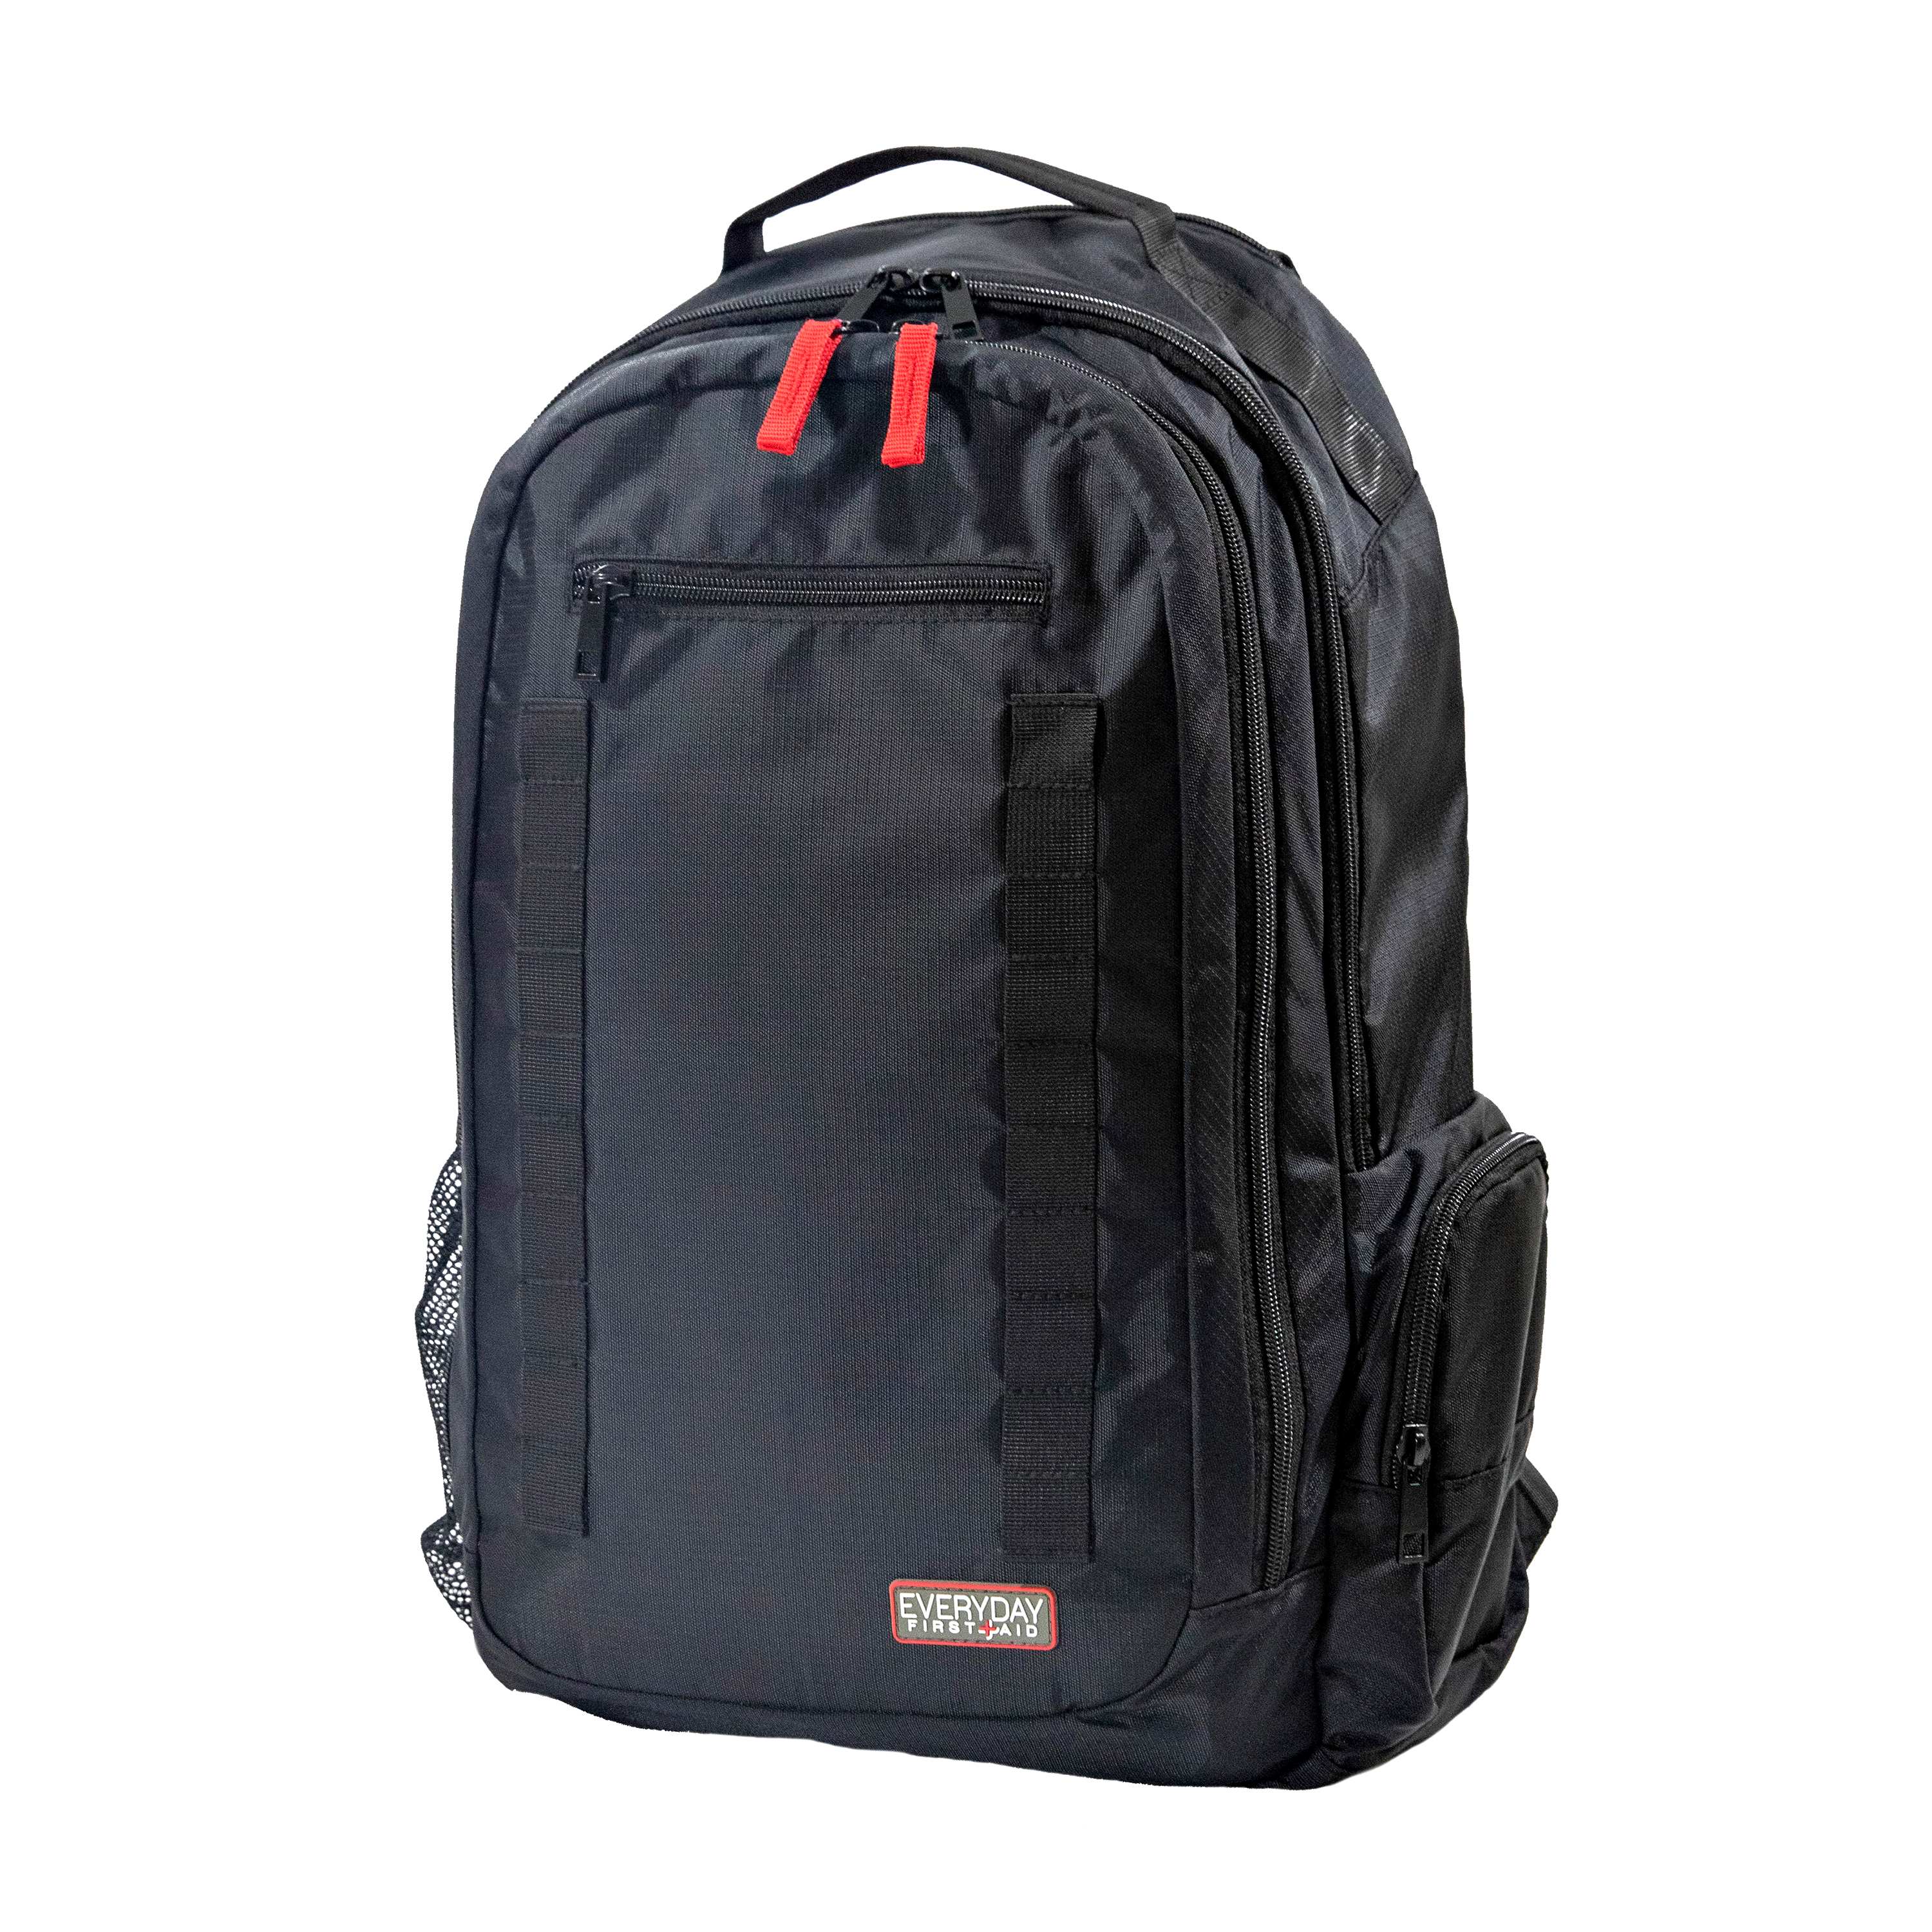 Base first aid kit backpack left side